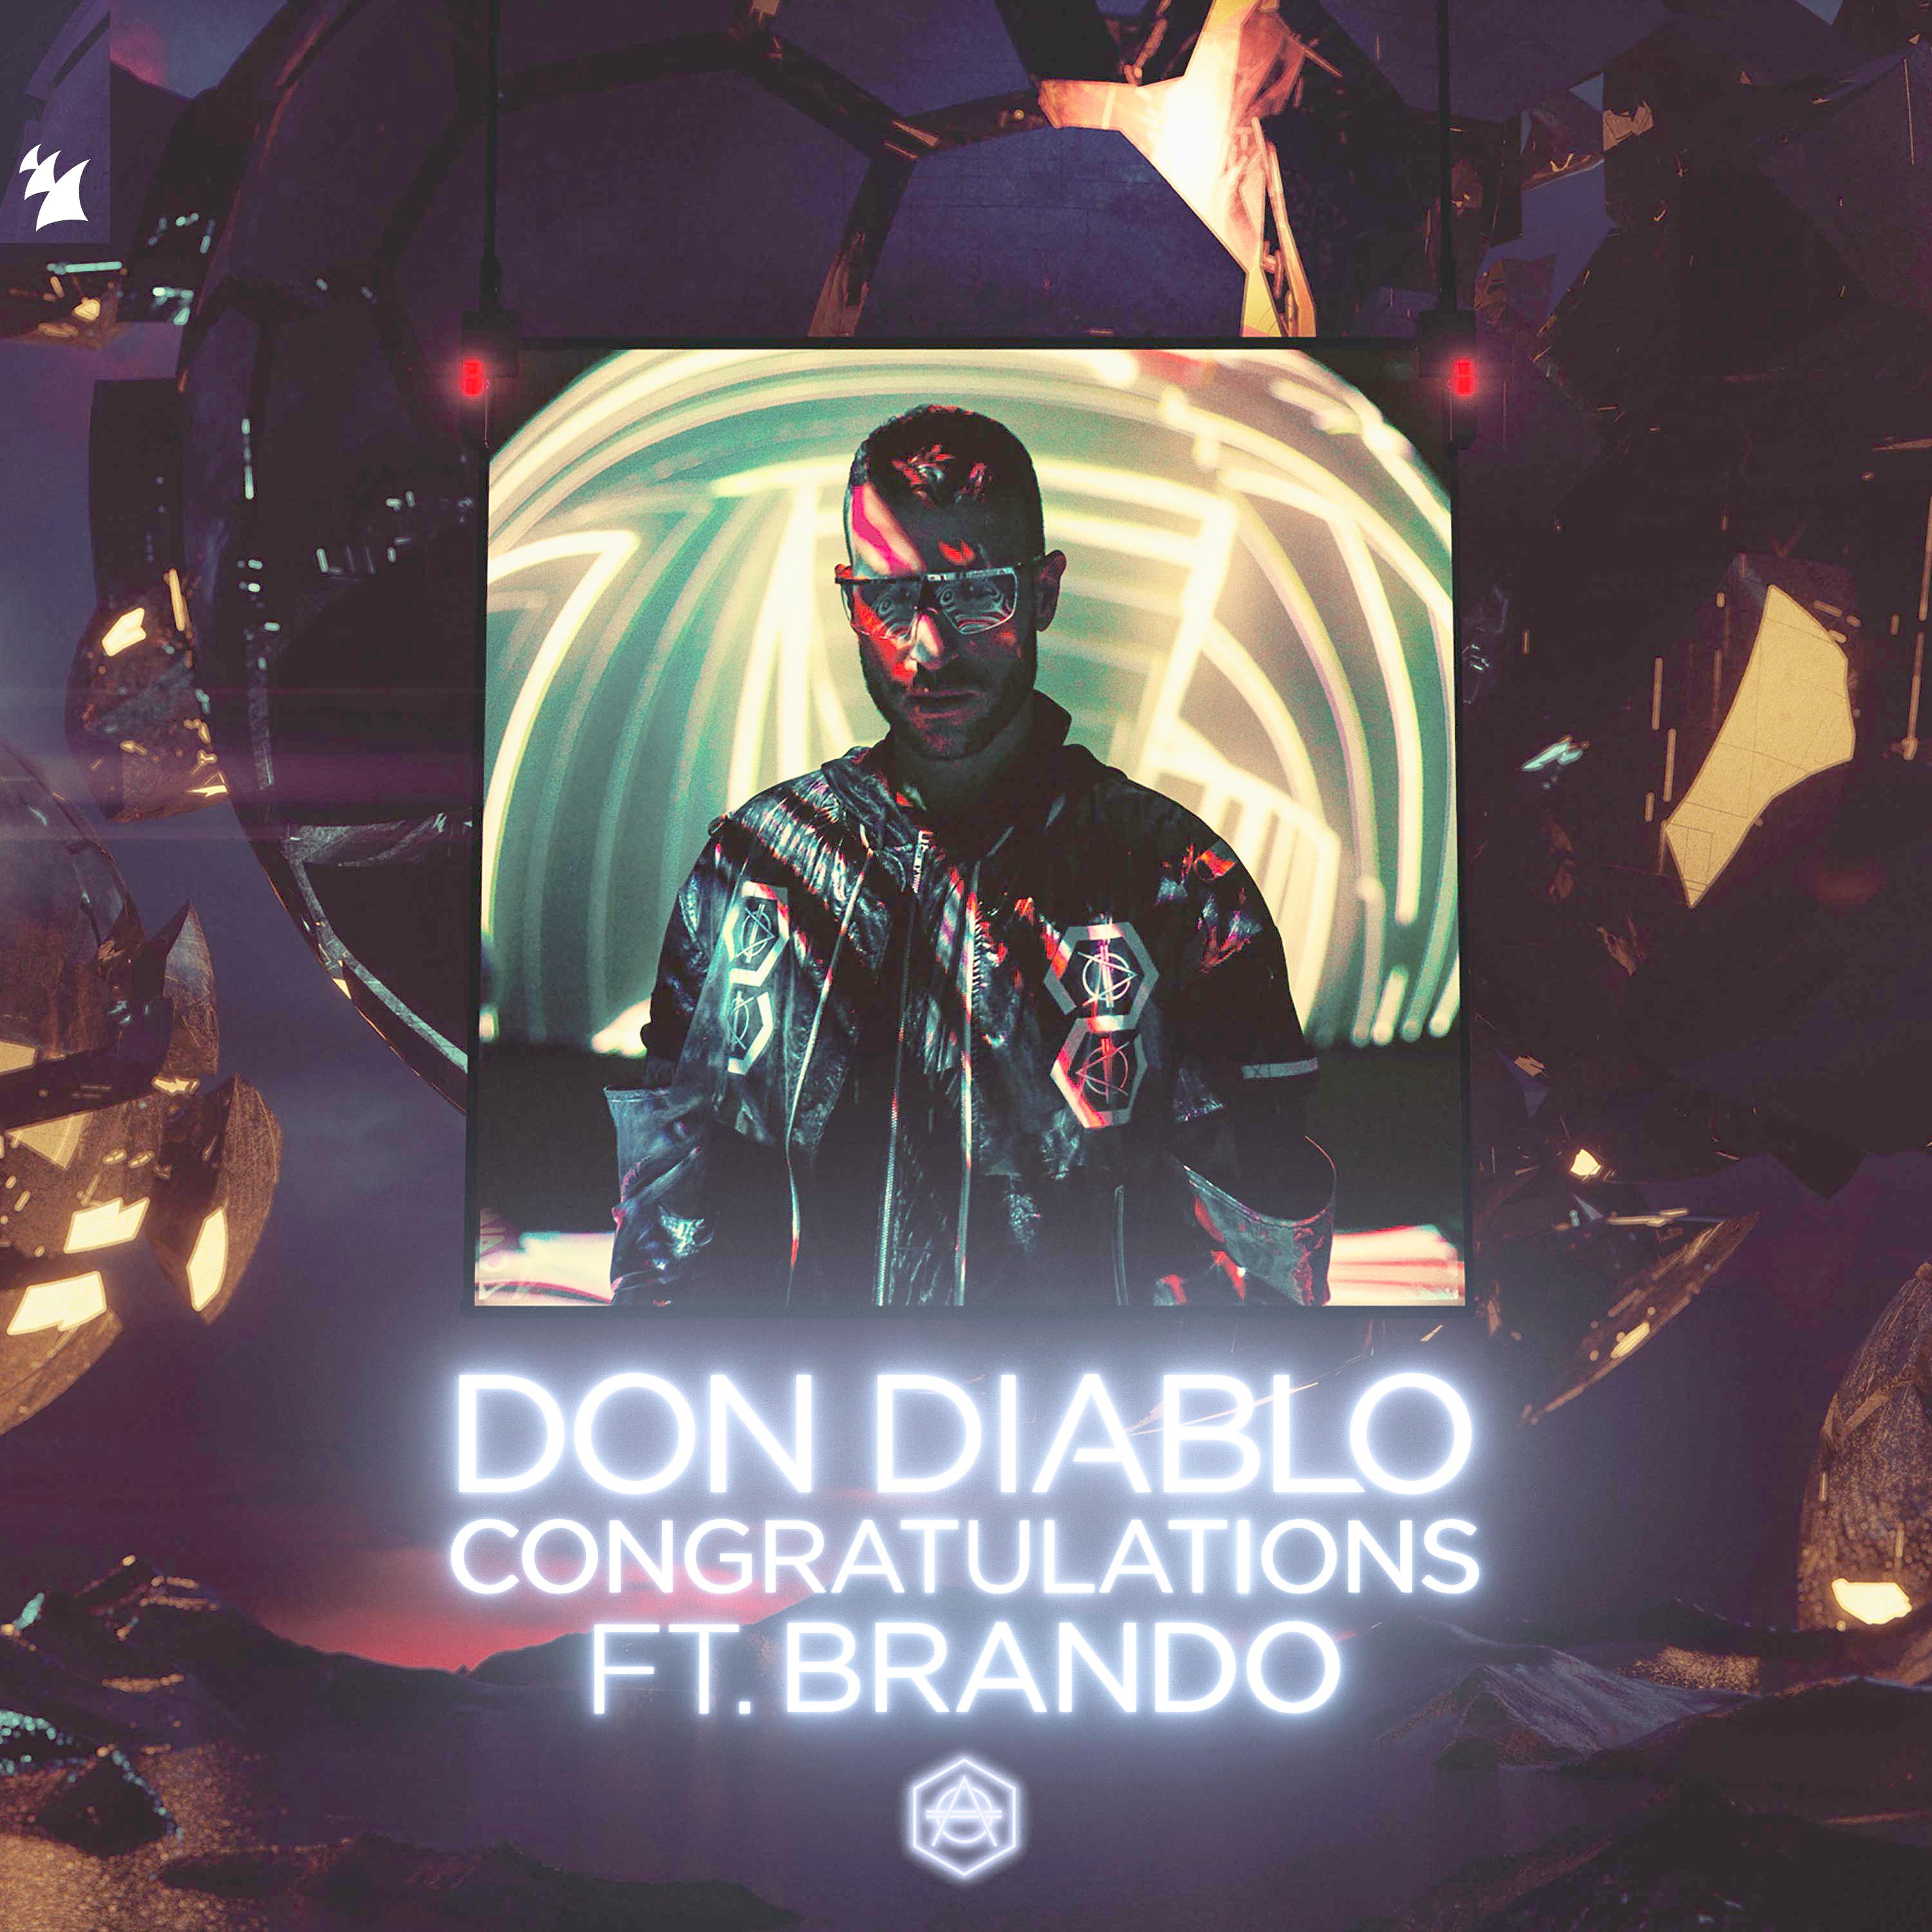 Art for Congratulations by Don Diablo (Feat. Brando)